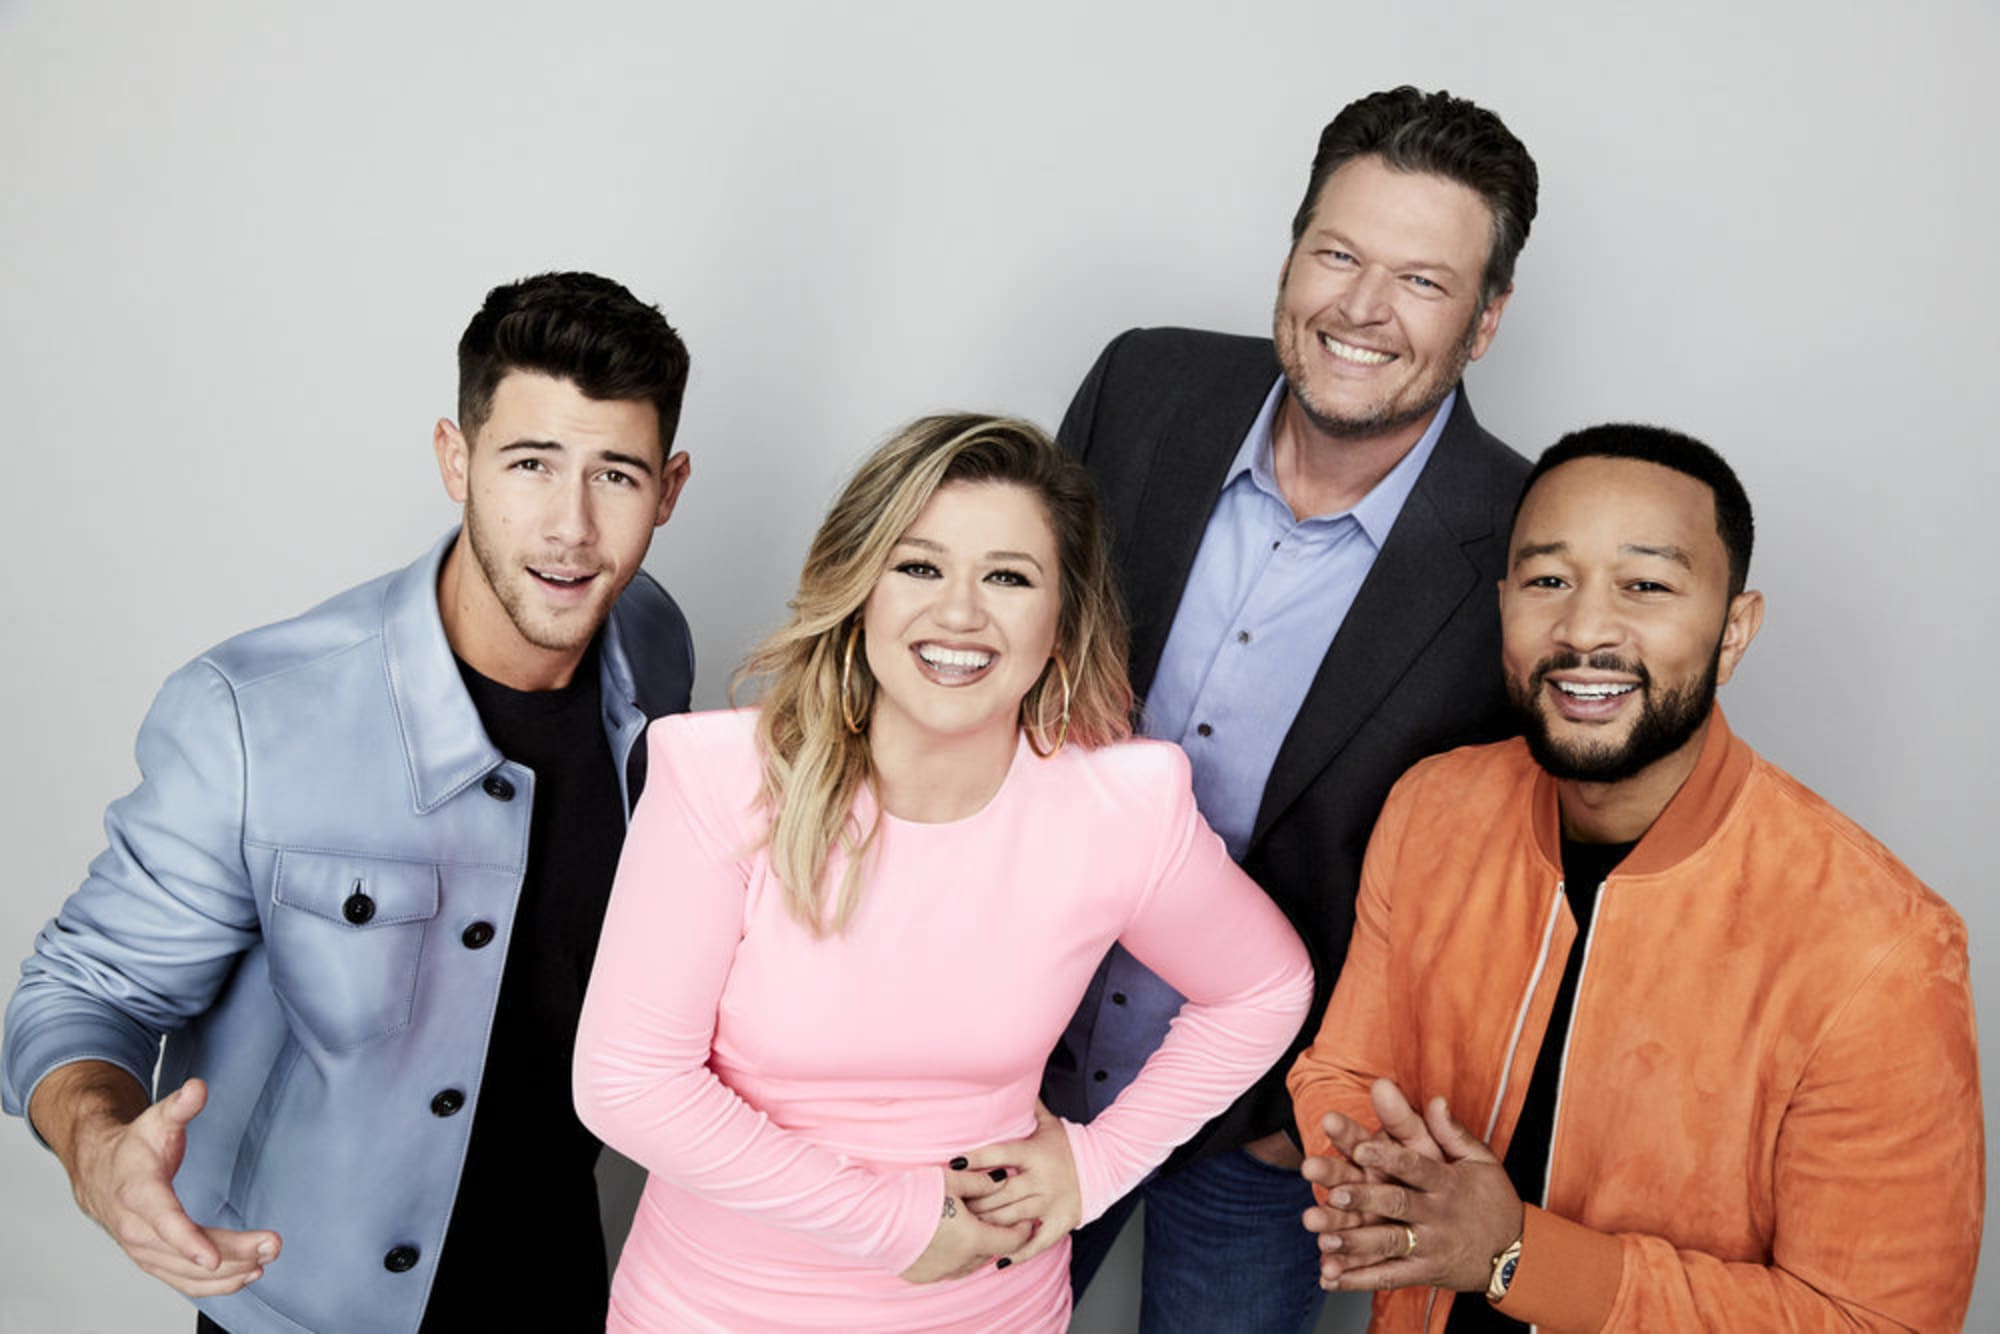 Is The Voice new tonight, April 19, on NBC? Flipboard